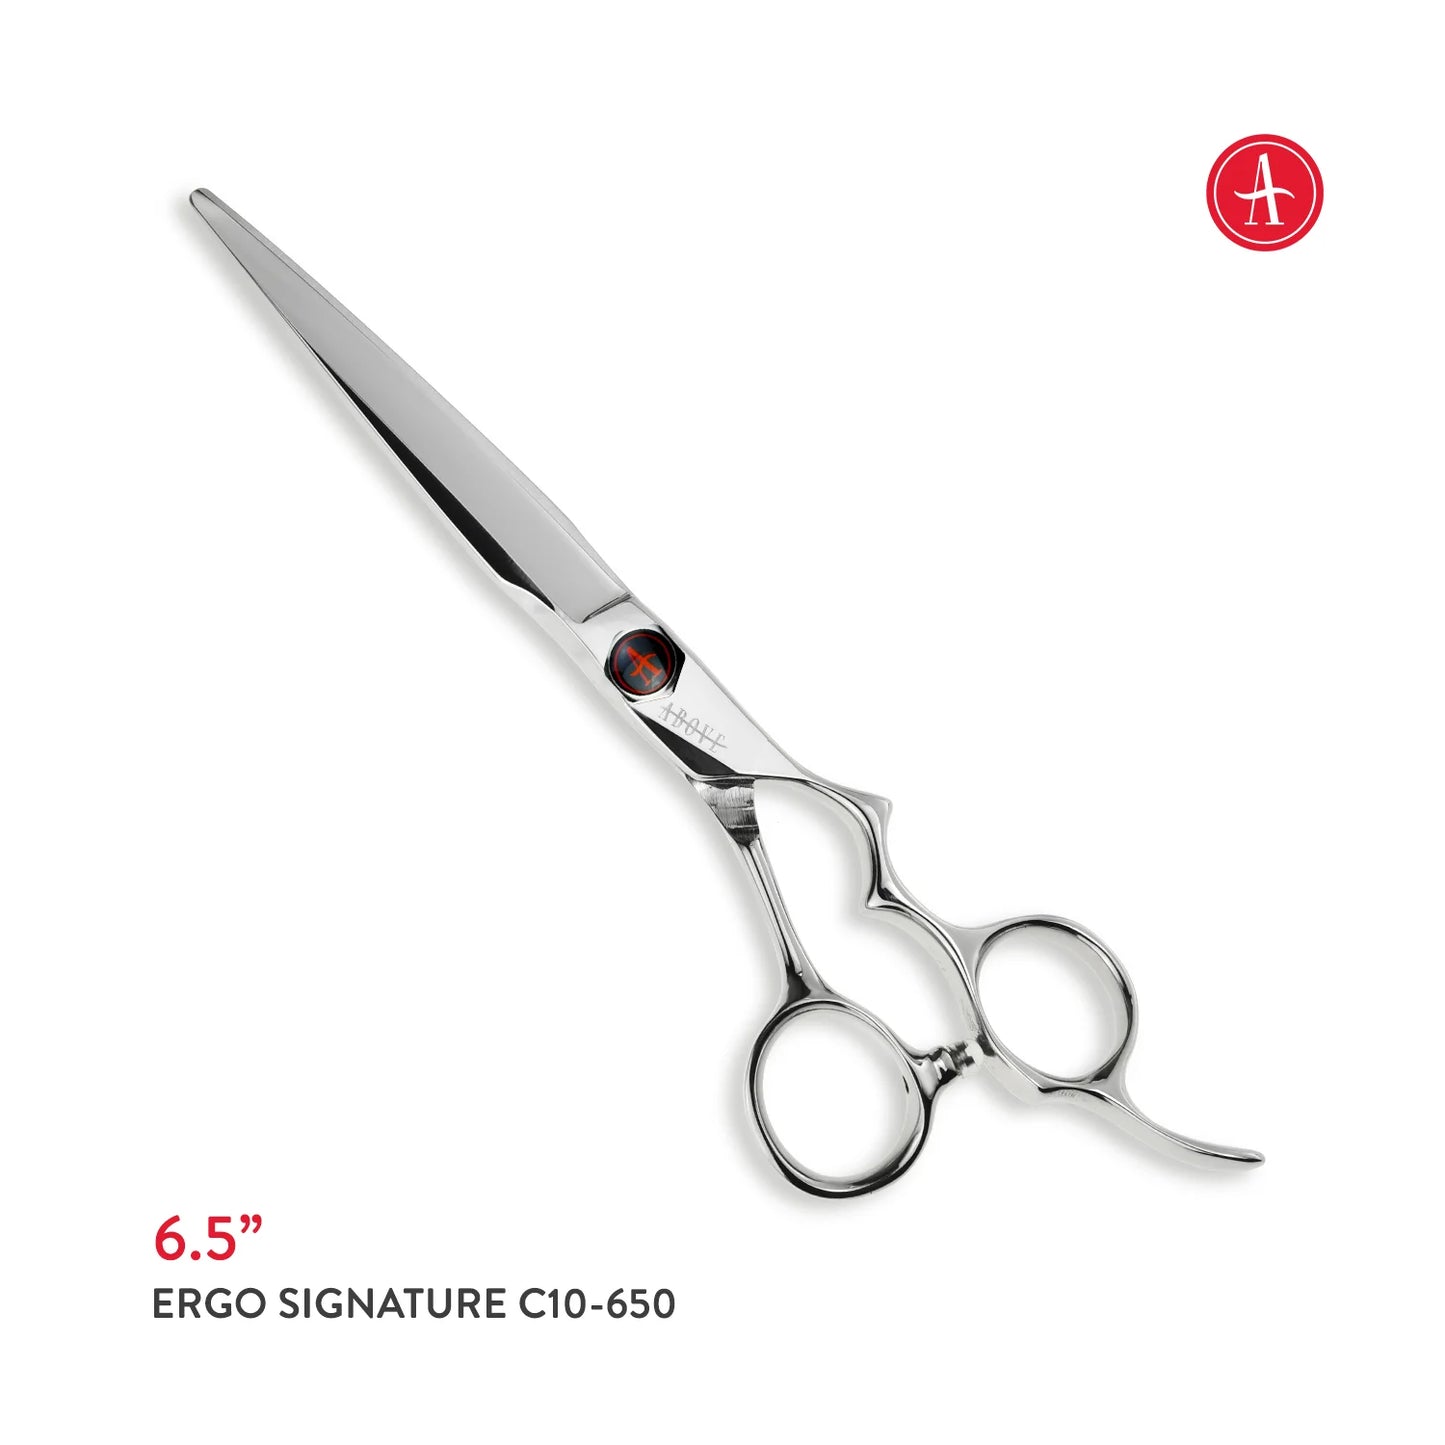 Above Ergo Signature Hair Cutting Shears – 5.5, 6.0, 6.5, 7.0